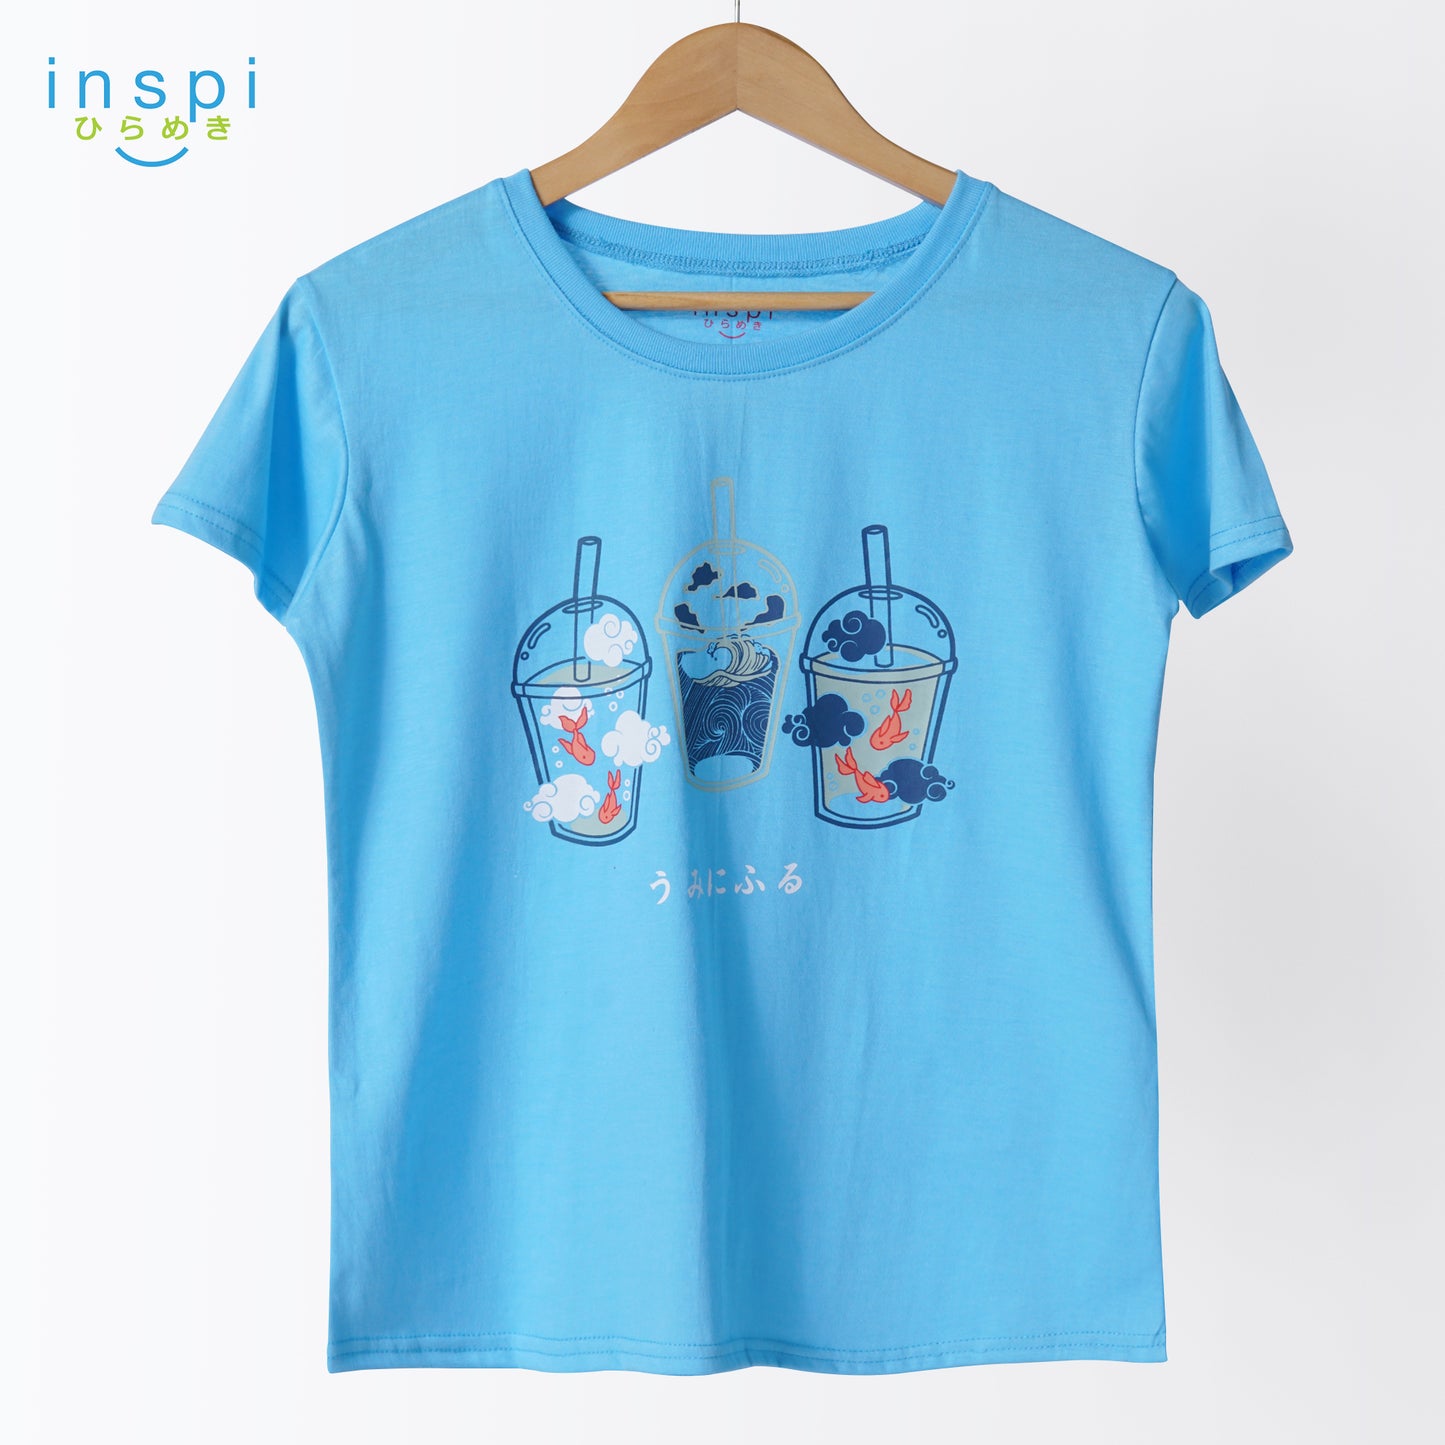 INSPI Tees Ladies Loose Fit Sea Shake Graphic Tshirt